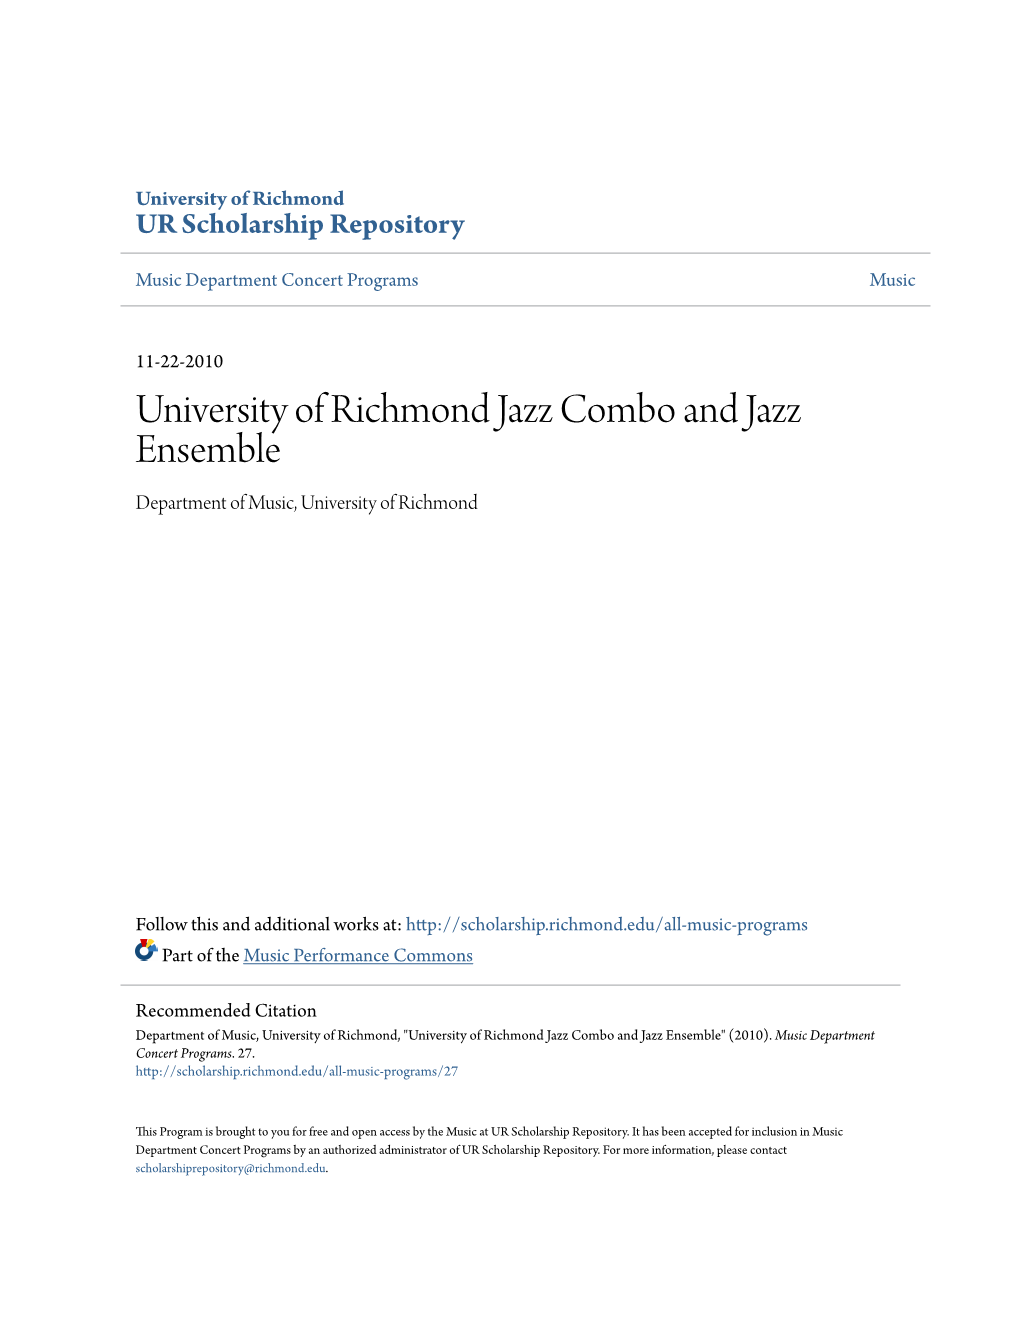 University of Richmond Jazz Combo and Jazz Ensemble Department of Music, University of Richmond